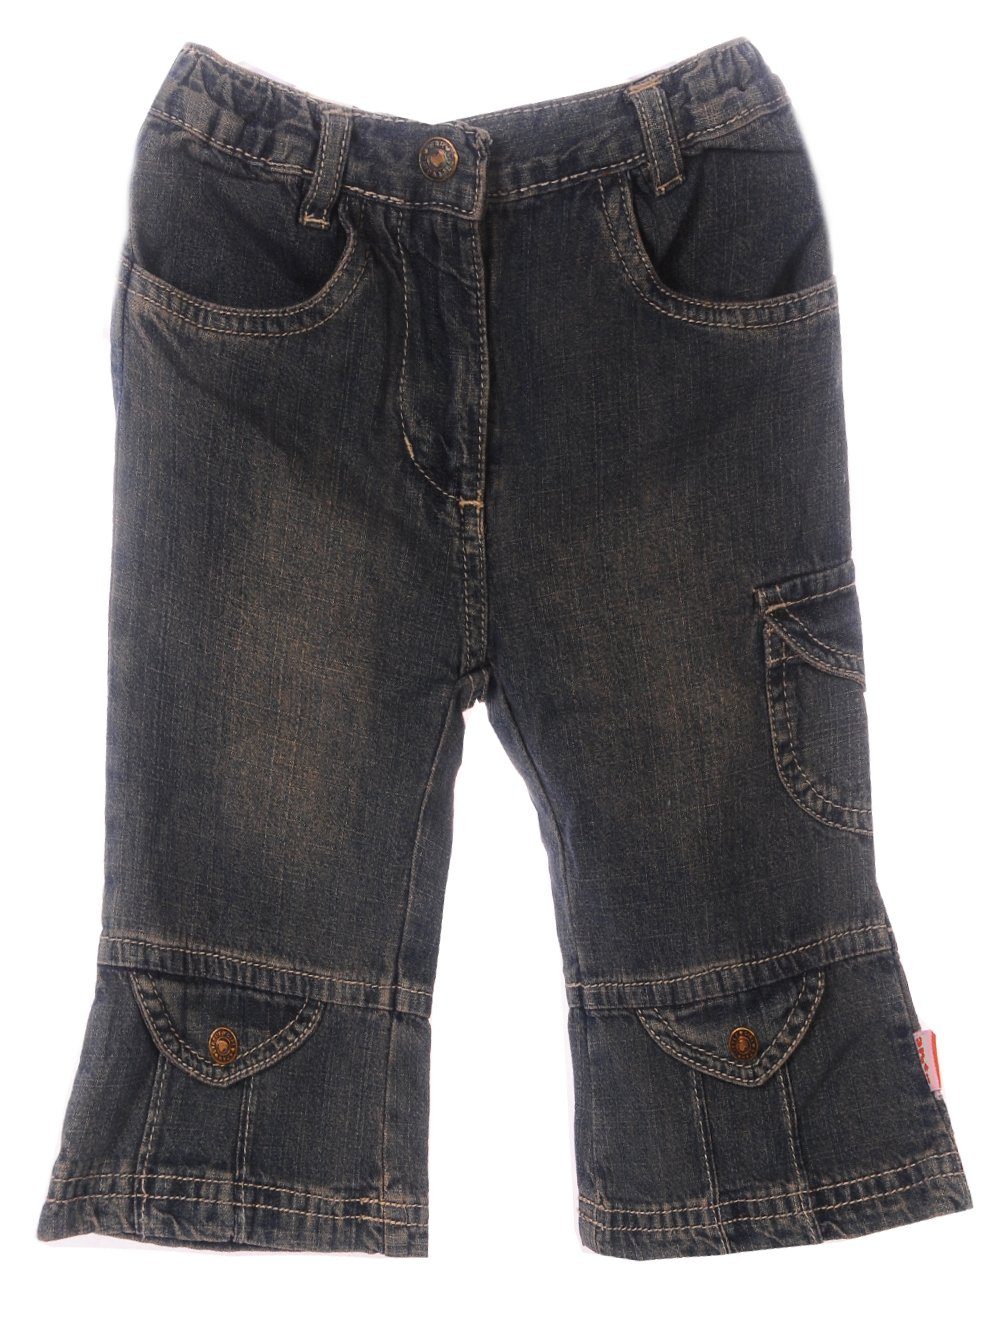 Hose & Baby Jeanshose Shorts Hose Jeans 86 80 leichte 74 86